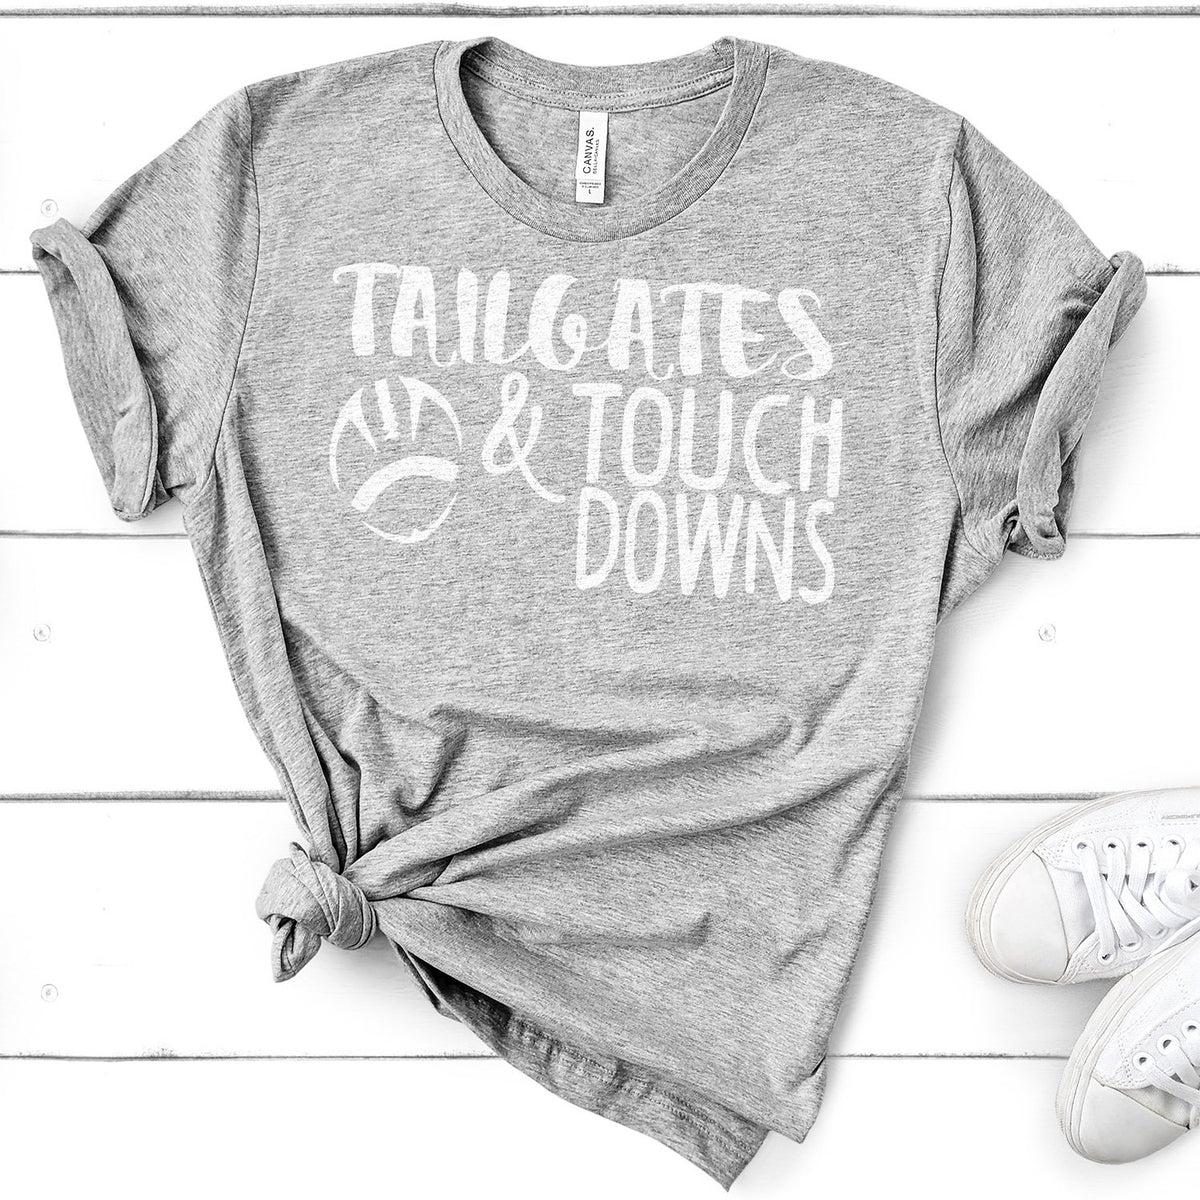 Tailgates &amp; Touchdowns - Short Sleeve Tee Shirt